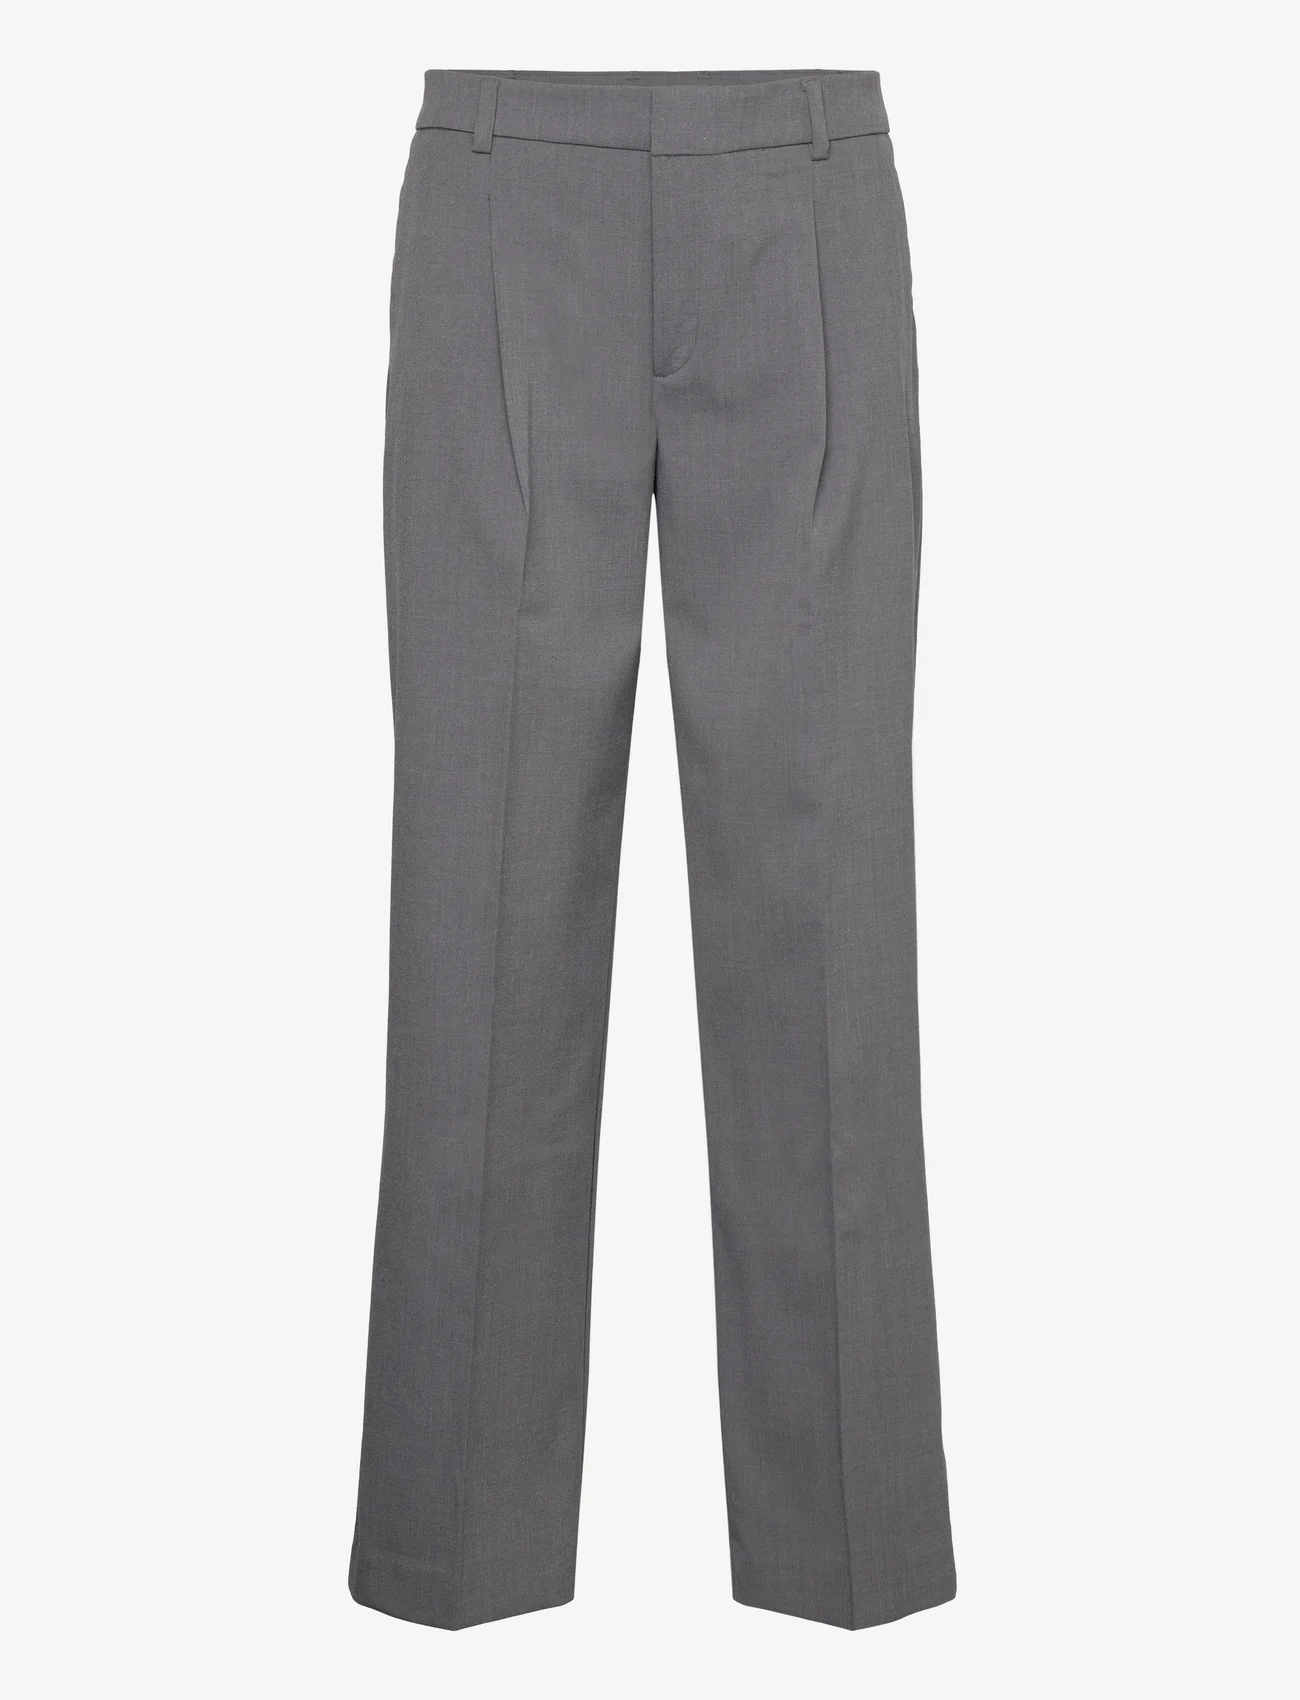 Mango - Flecked straight pants - dressbukser - grey - 0